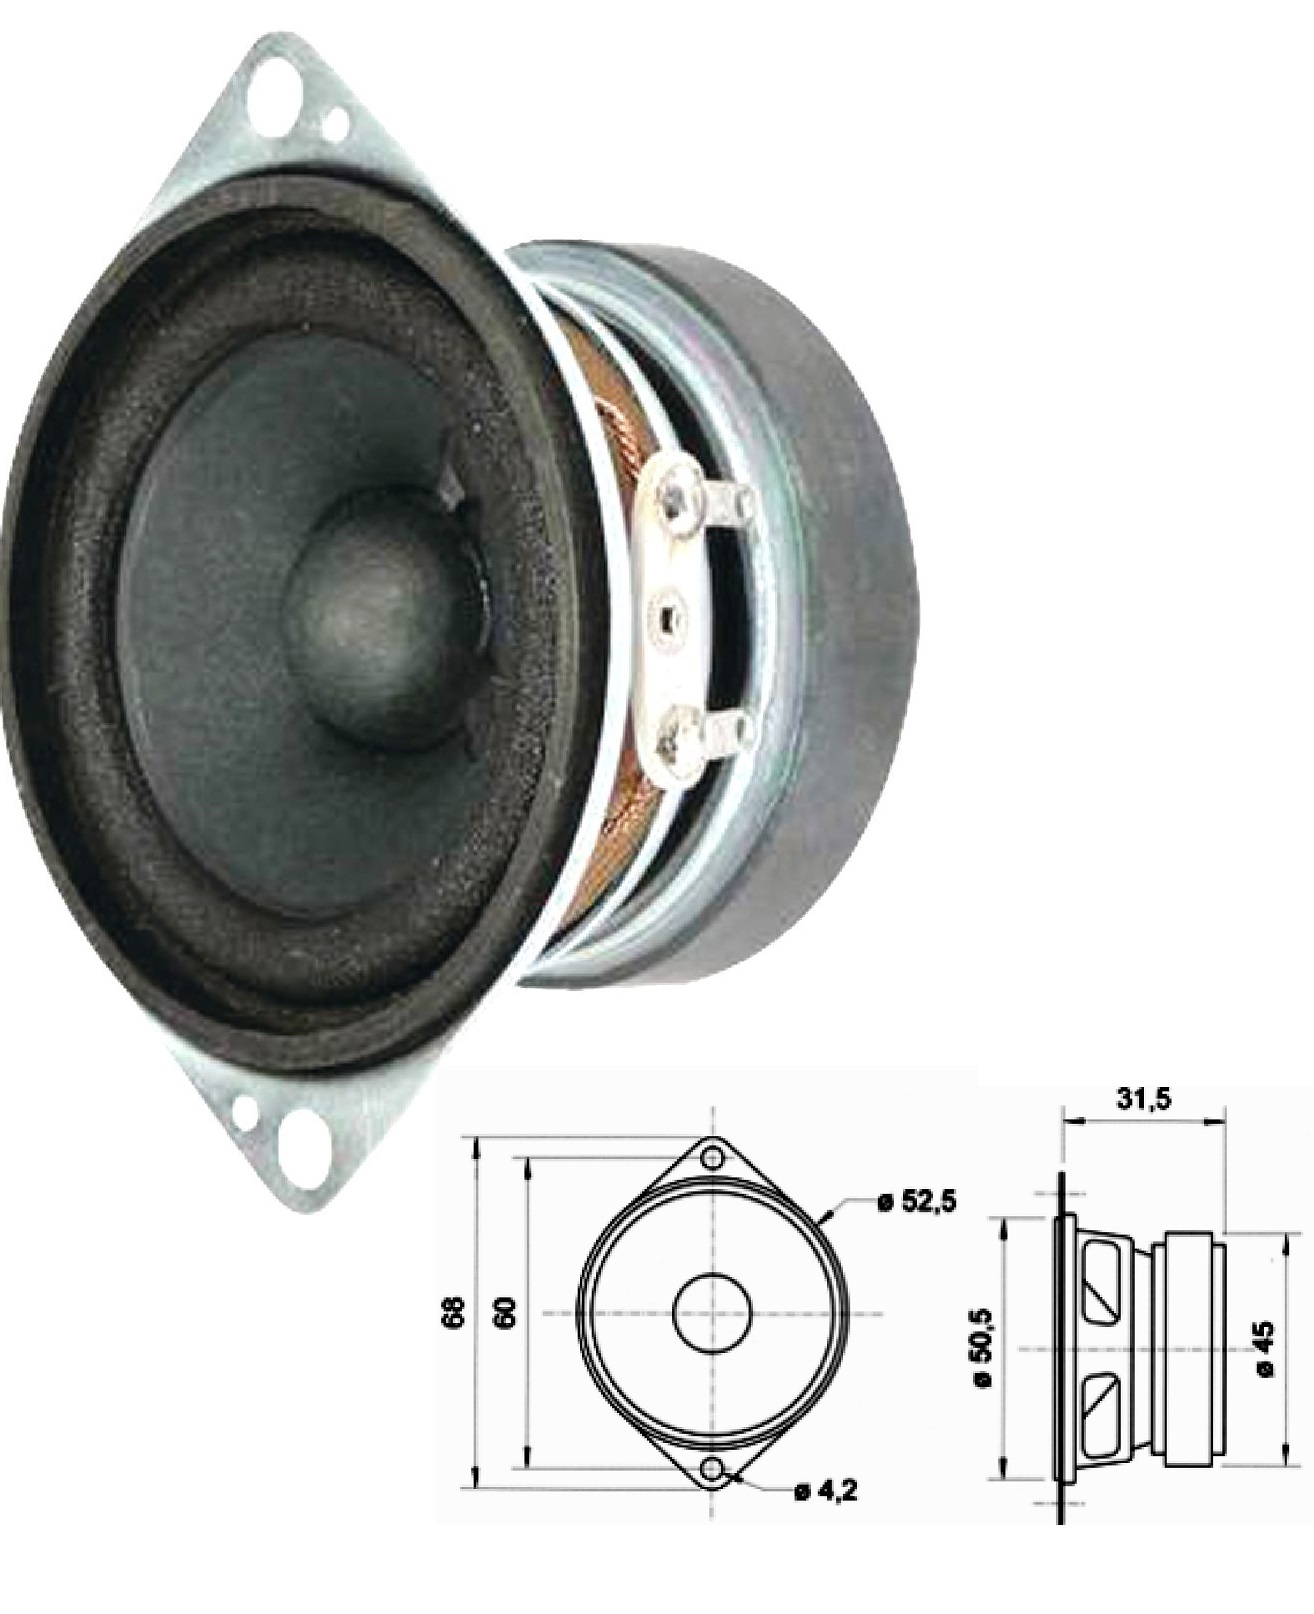 2 inch 8 ohm speaker